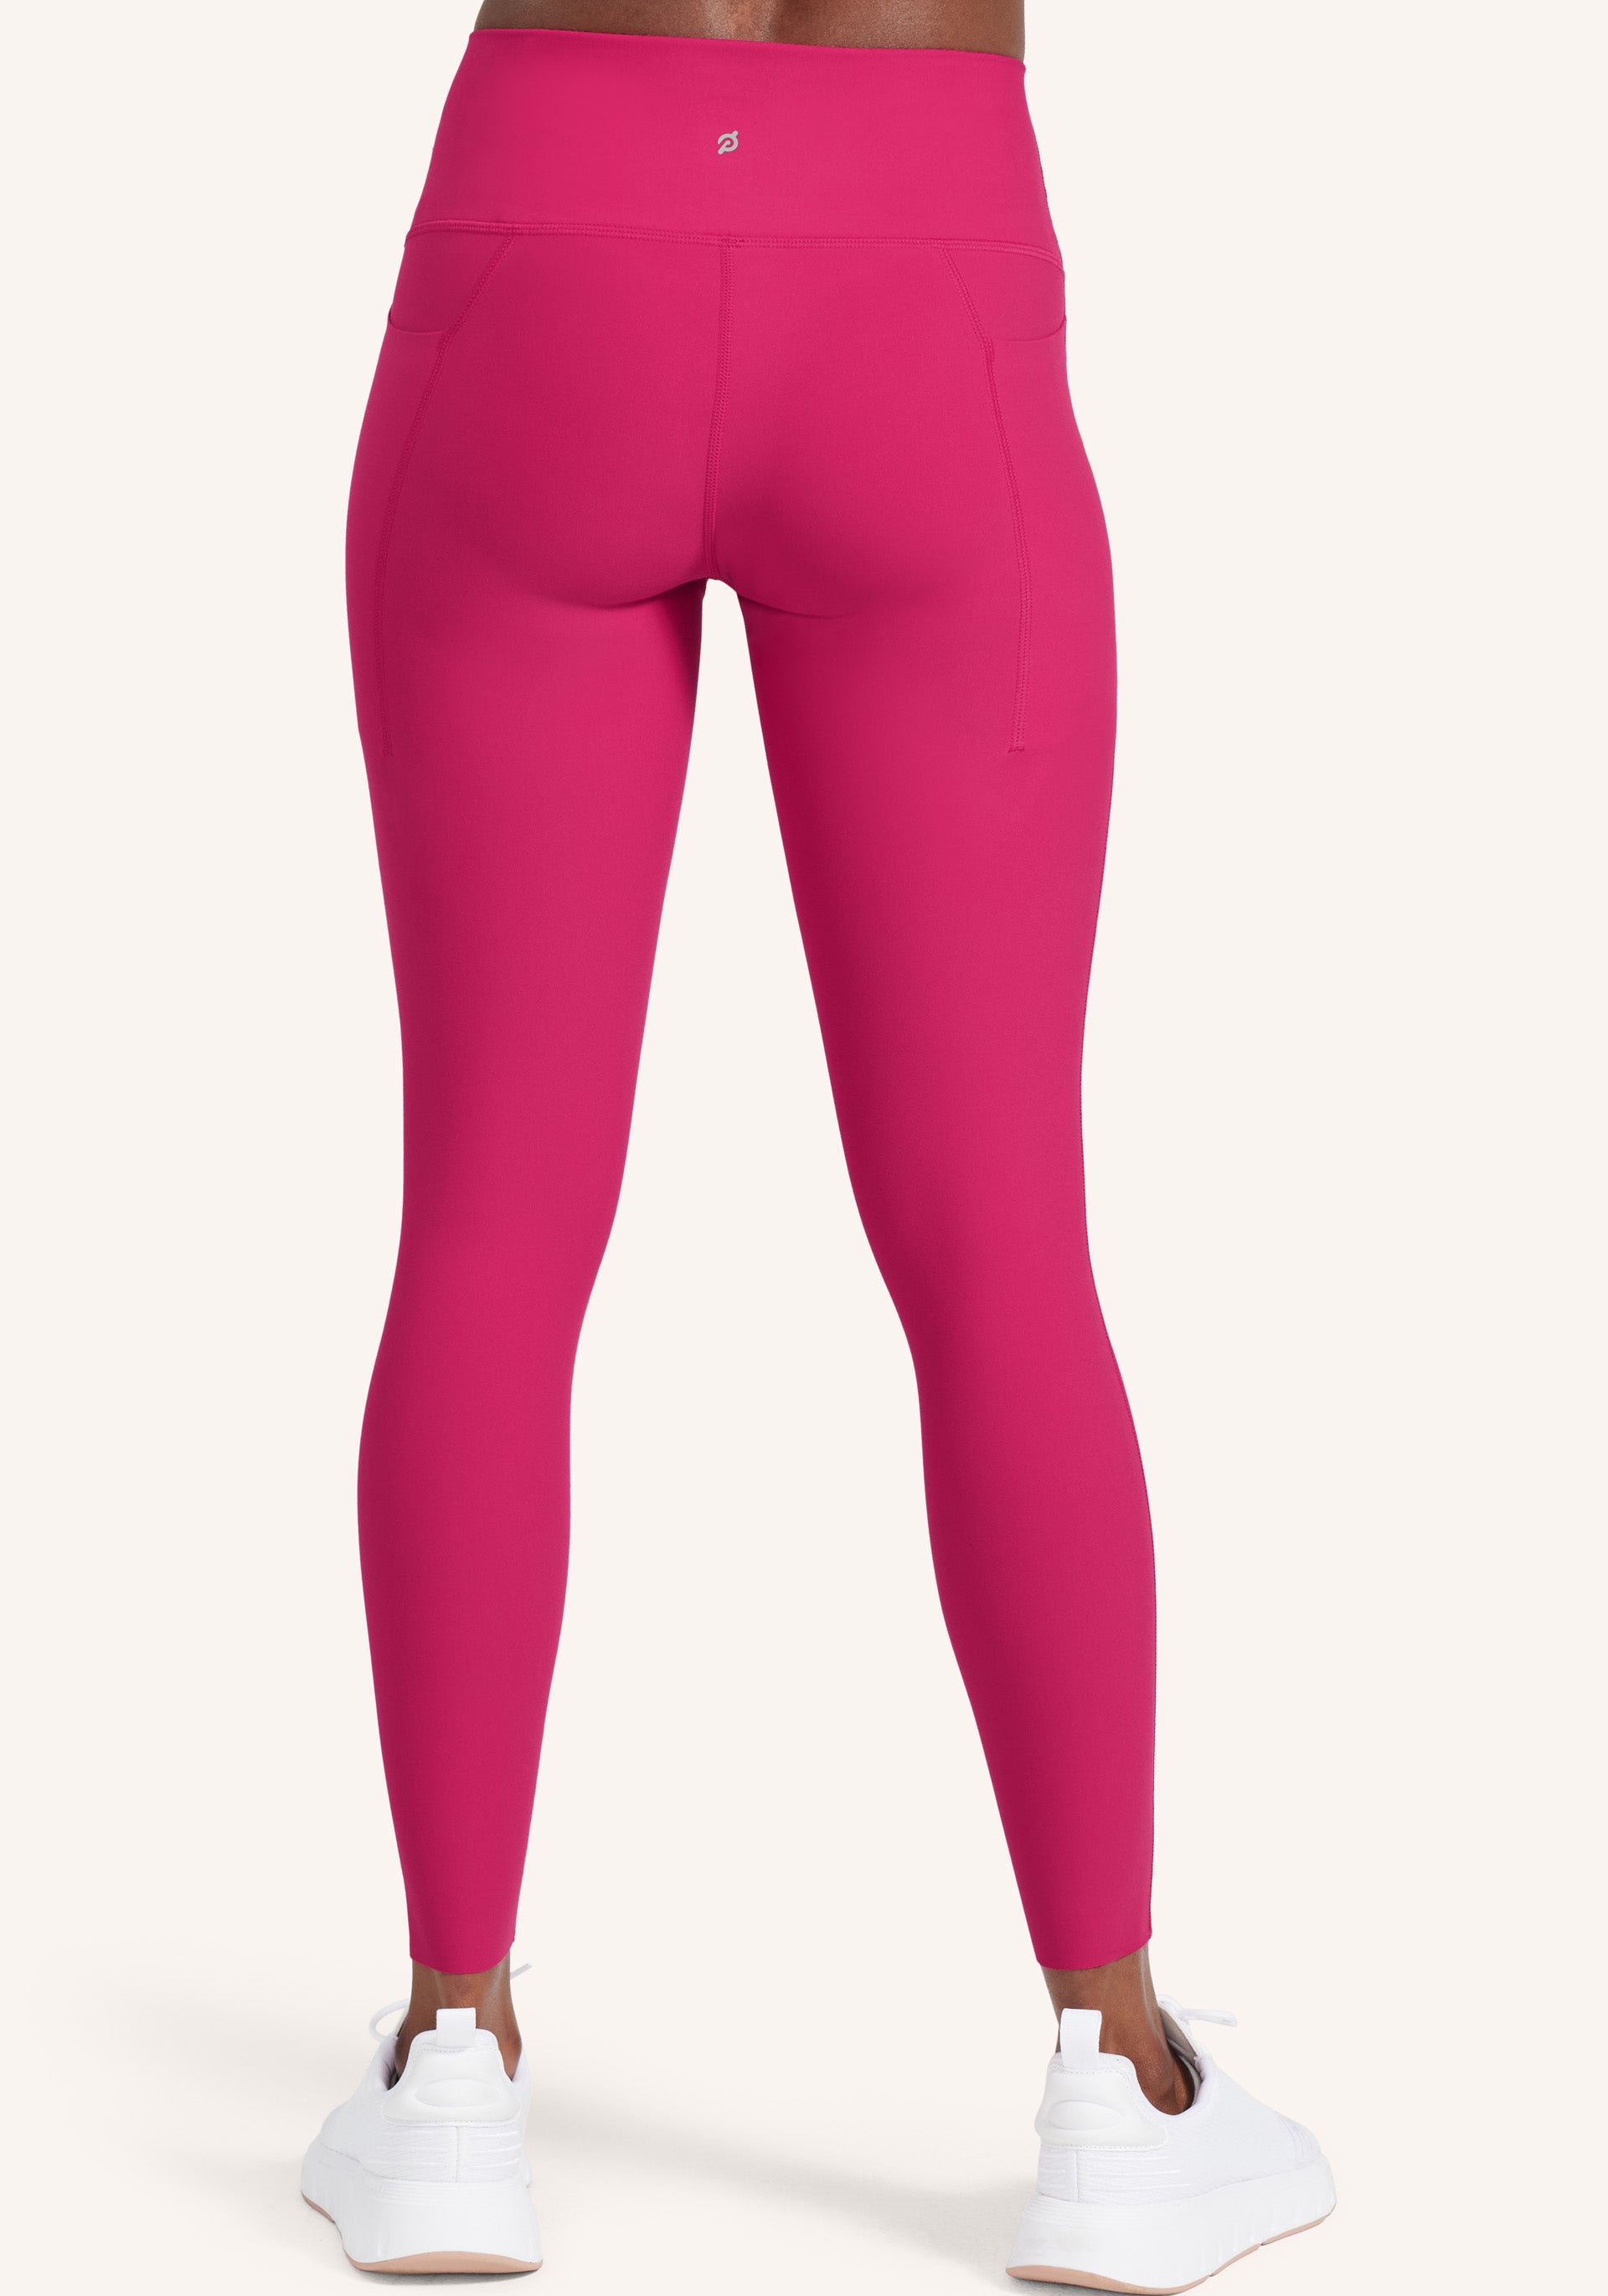 Peloton Cadent Trailblazer Hi- Rise Pink 7/8 Leggings Size Medium